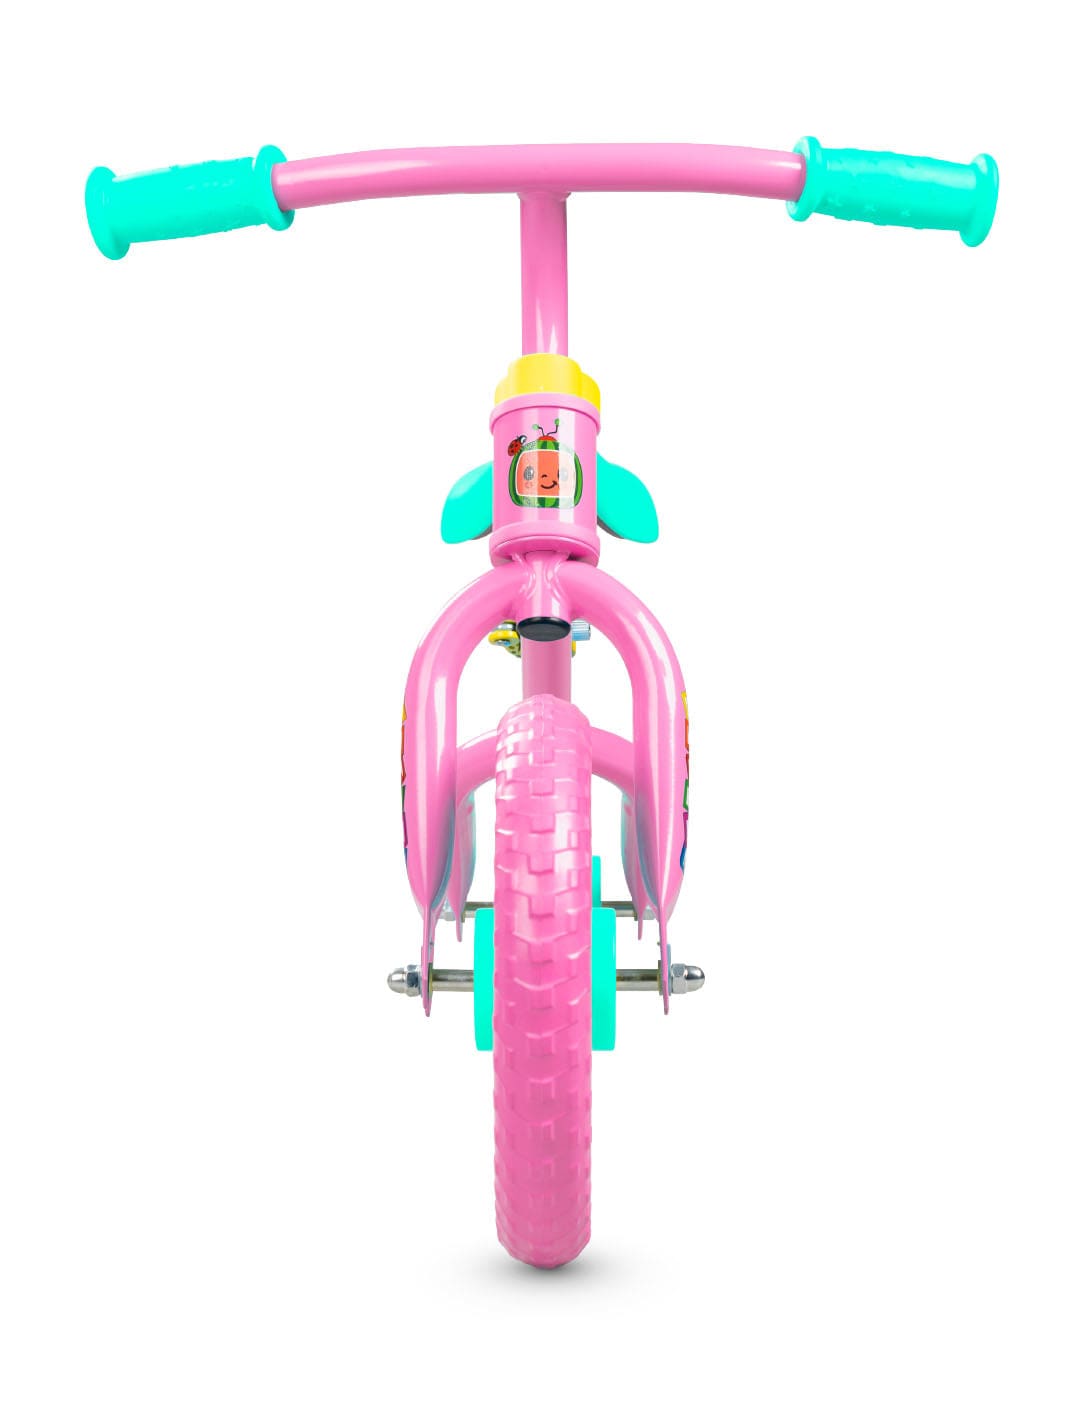 Cocomelon Beginner Balance Bike & Helmet - Pink